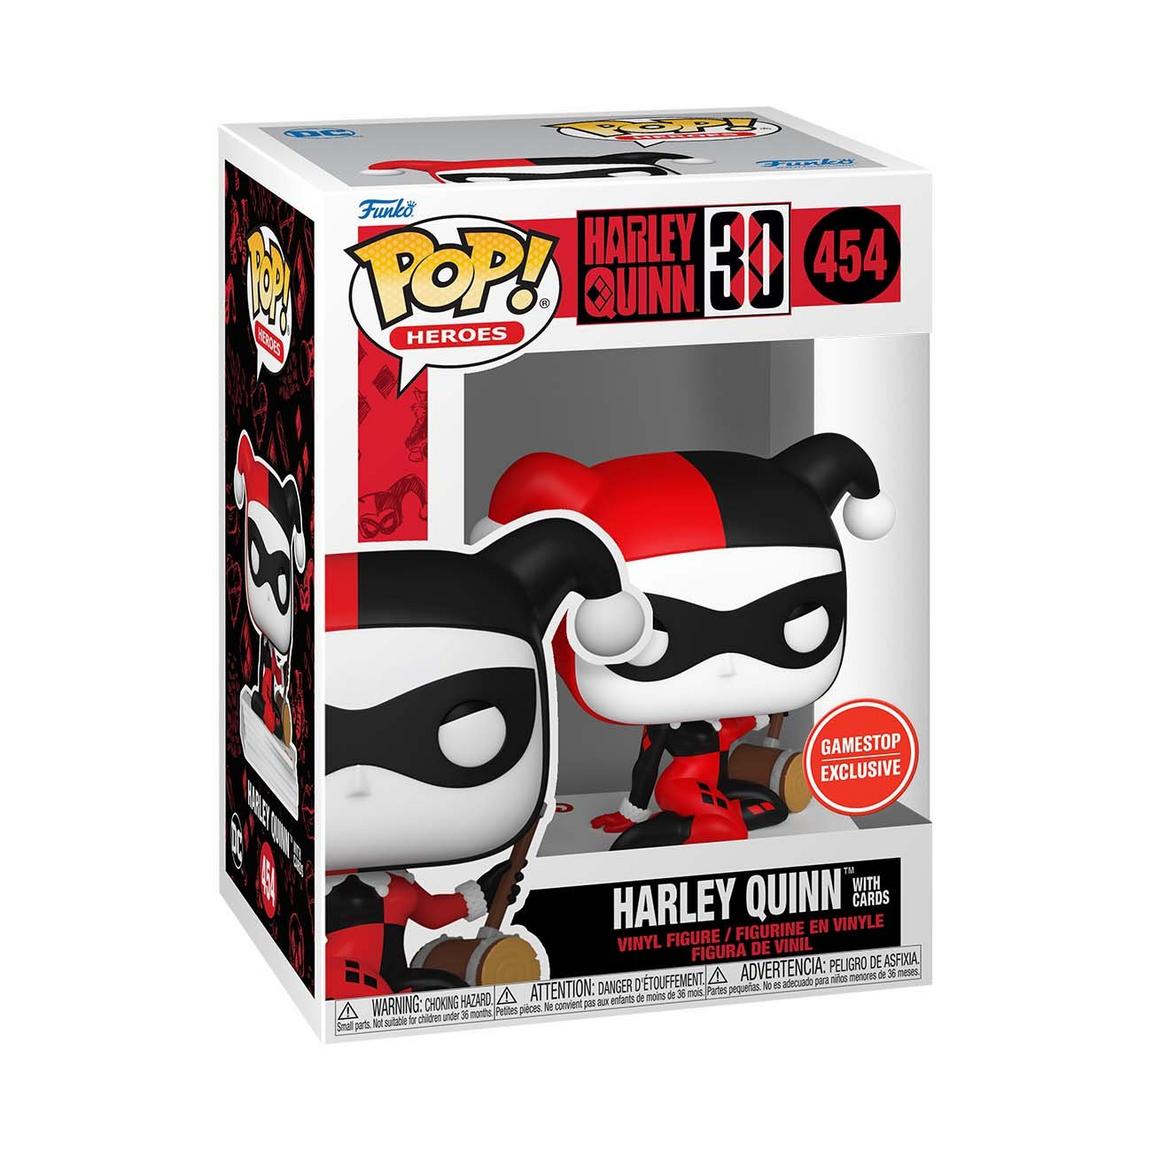 Funko POP! Heroes: Harley Quinn 30th Anniversary Harley Quinn with Cards Vinyl Figure GameStop Exclusive